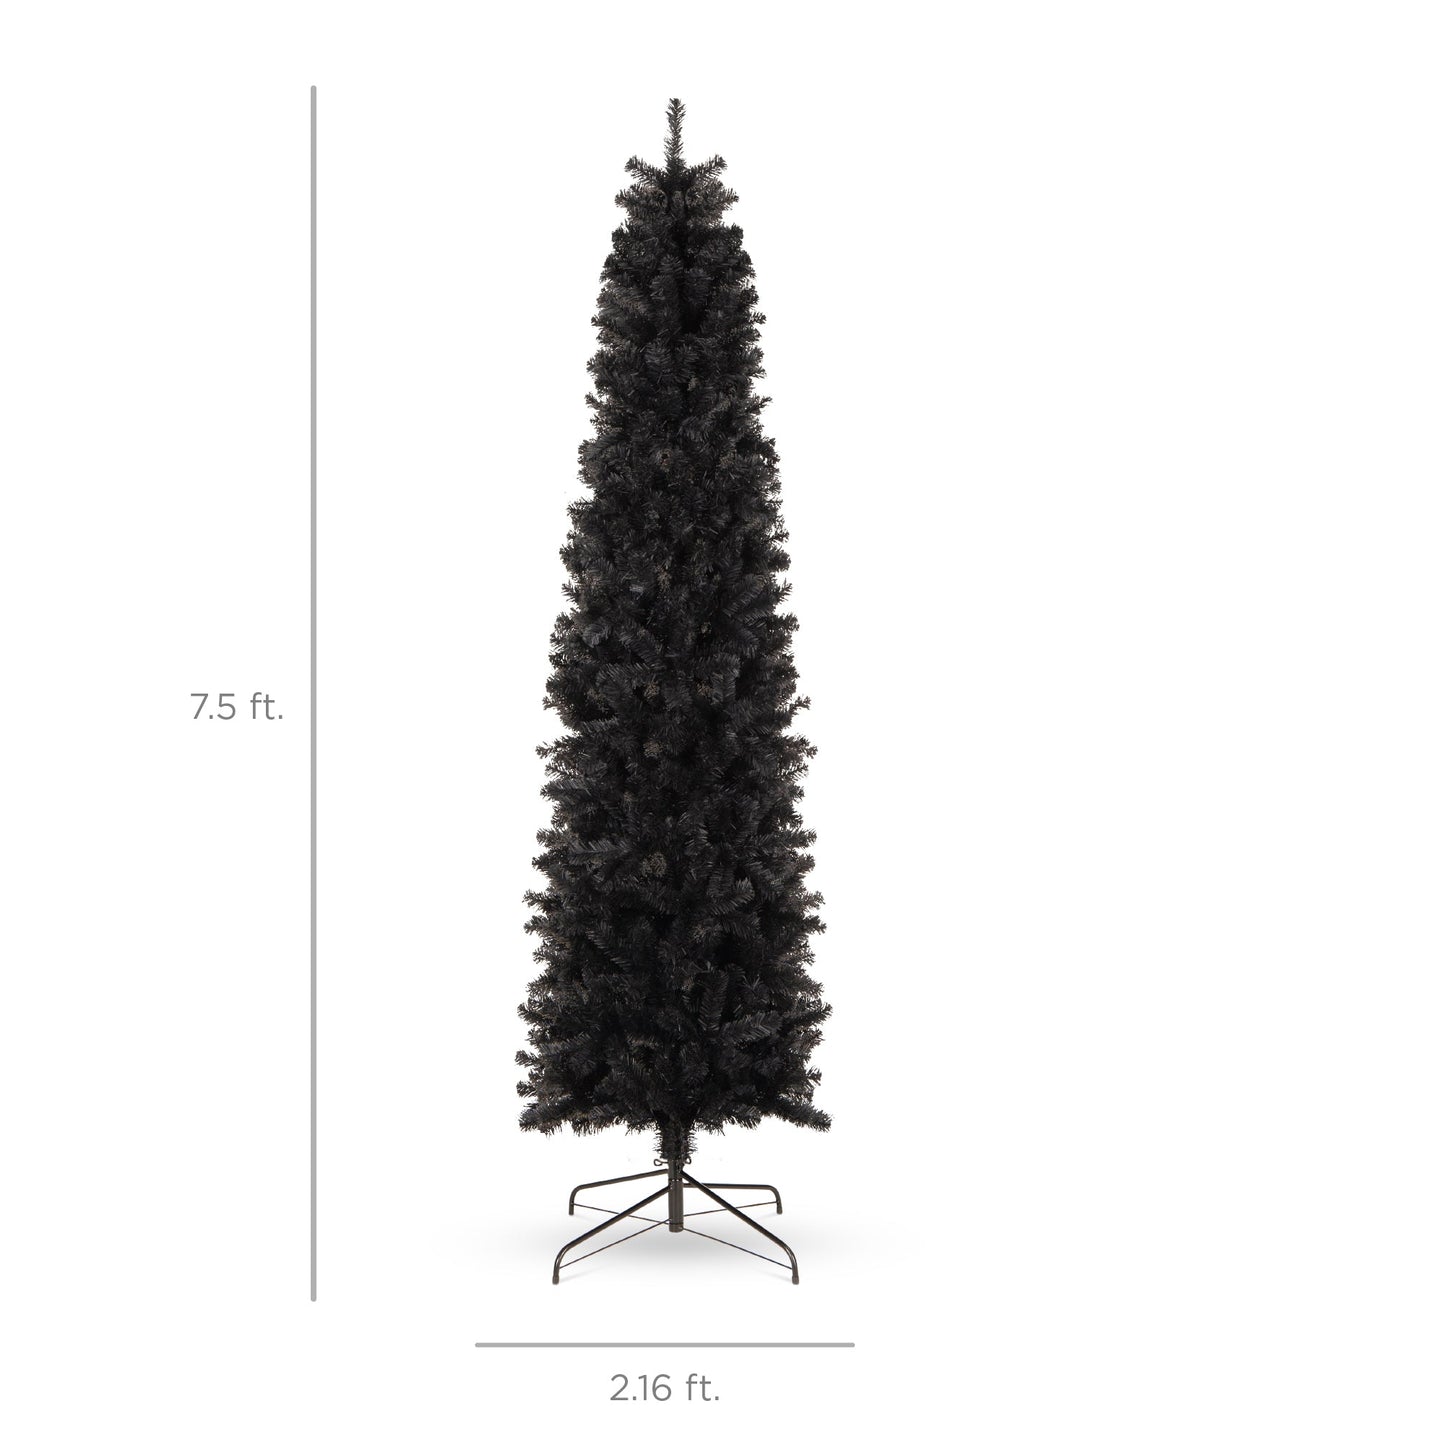 Black Artificial Pencil Holiday Christmas Tree